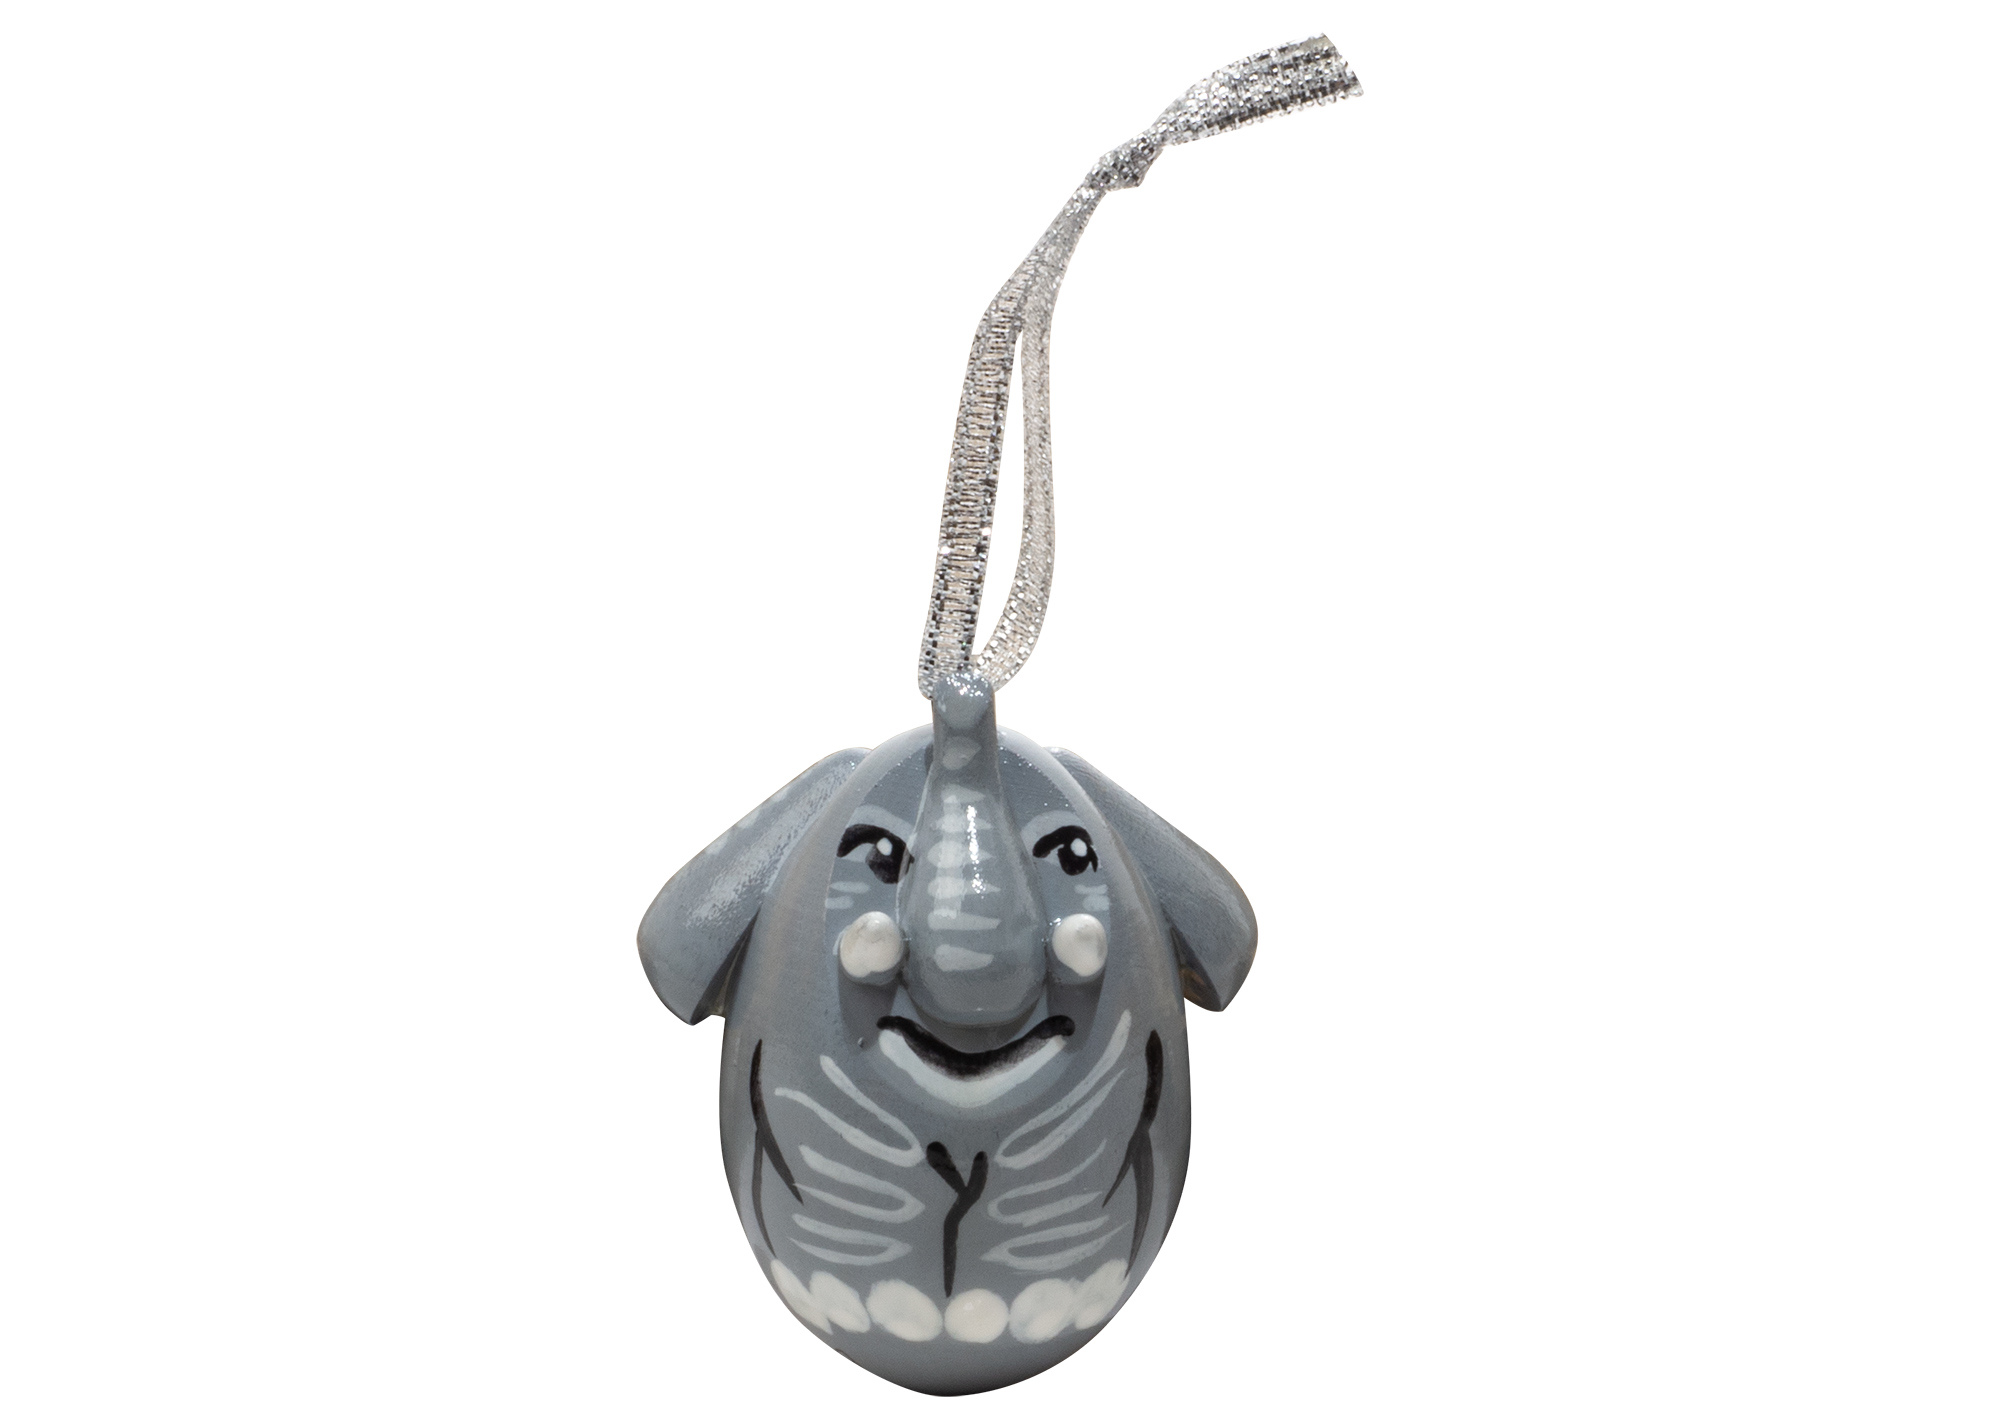 Buy Elephant Ornament 2" at GoldenCockerel.com